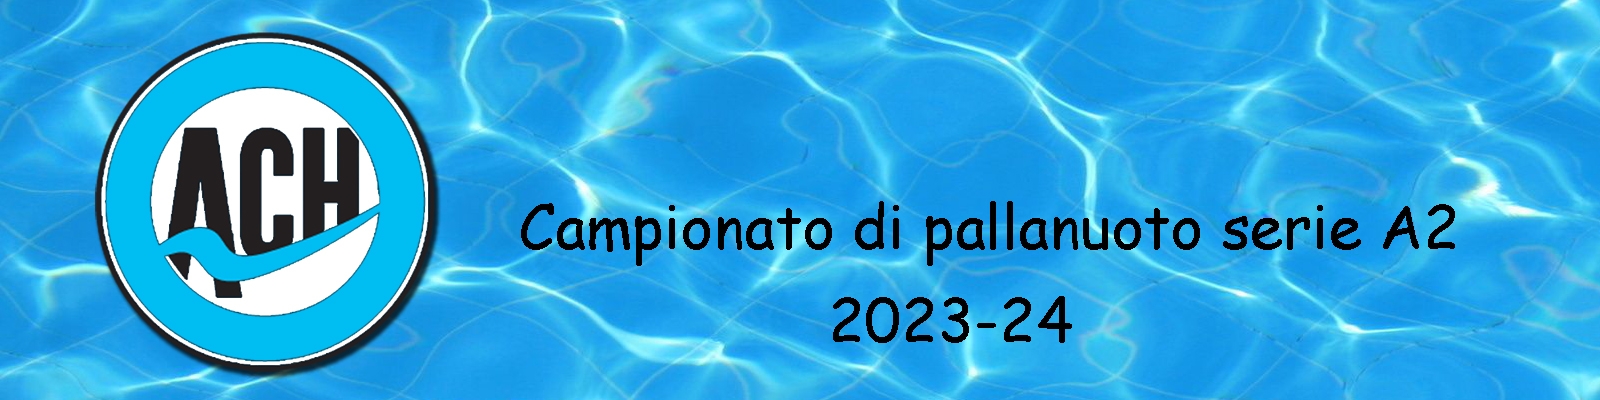 Acquachiara anno 2023-24